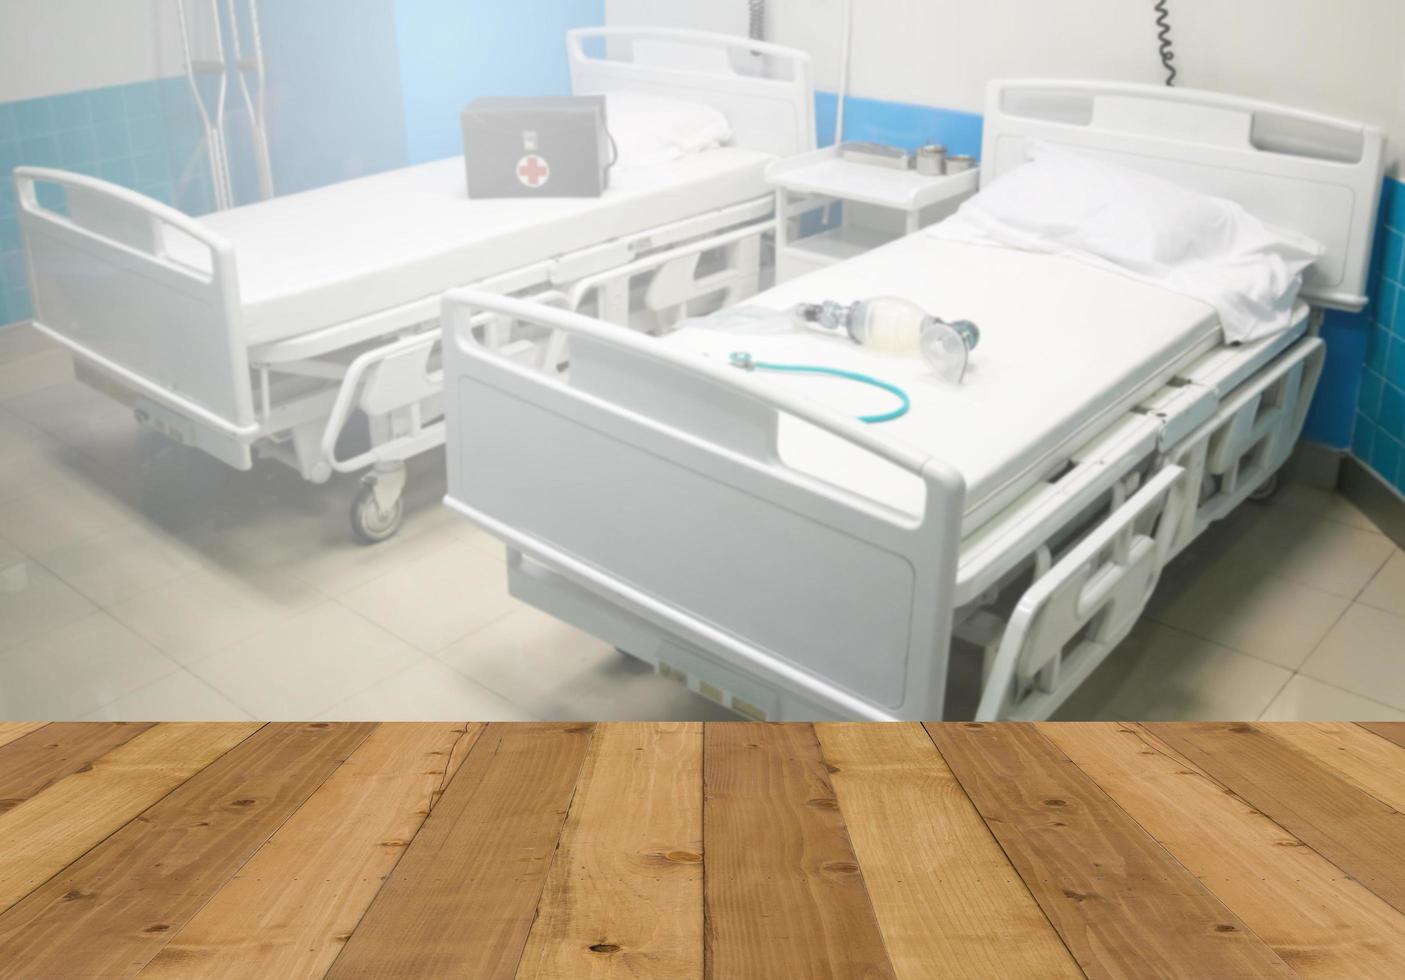 Wood floor and interior hospital background photo